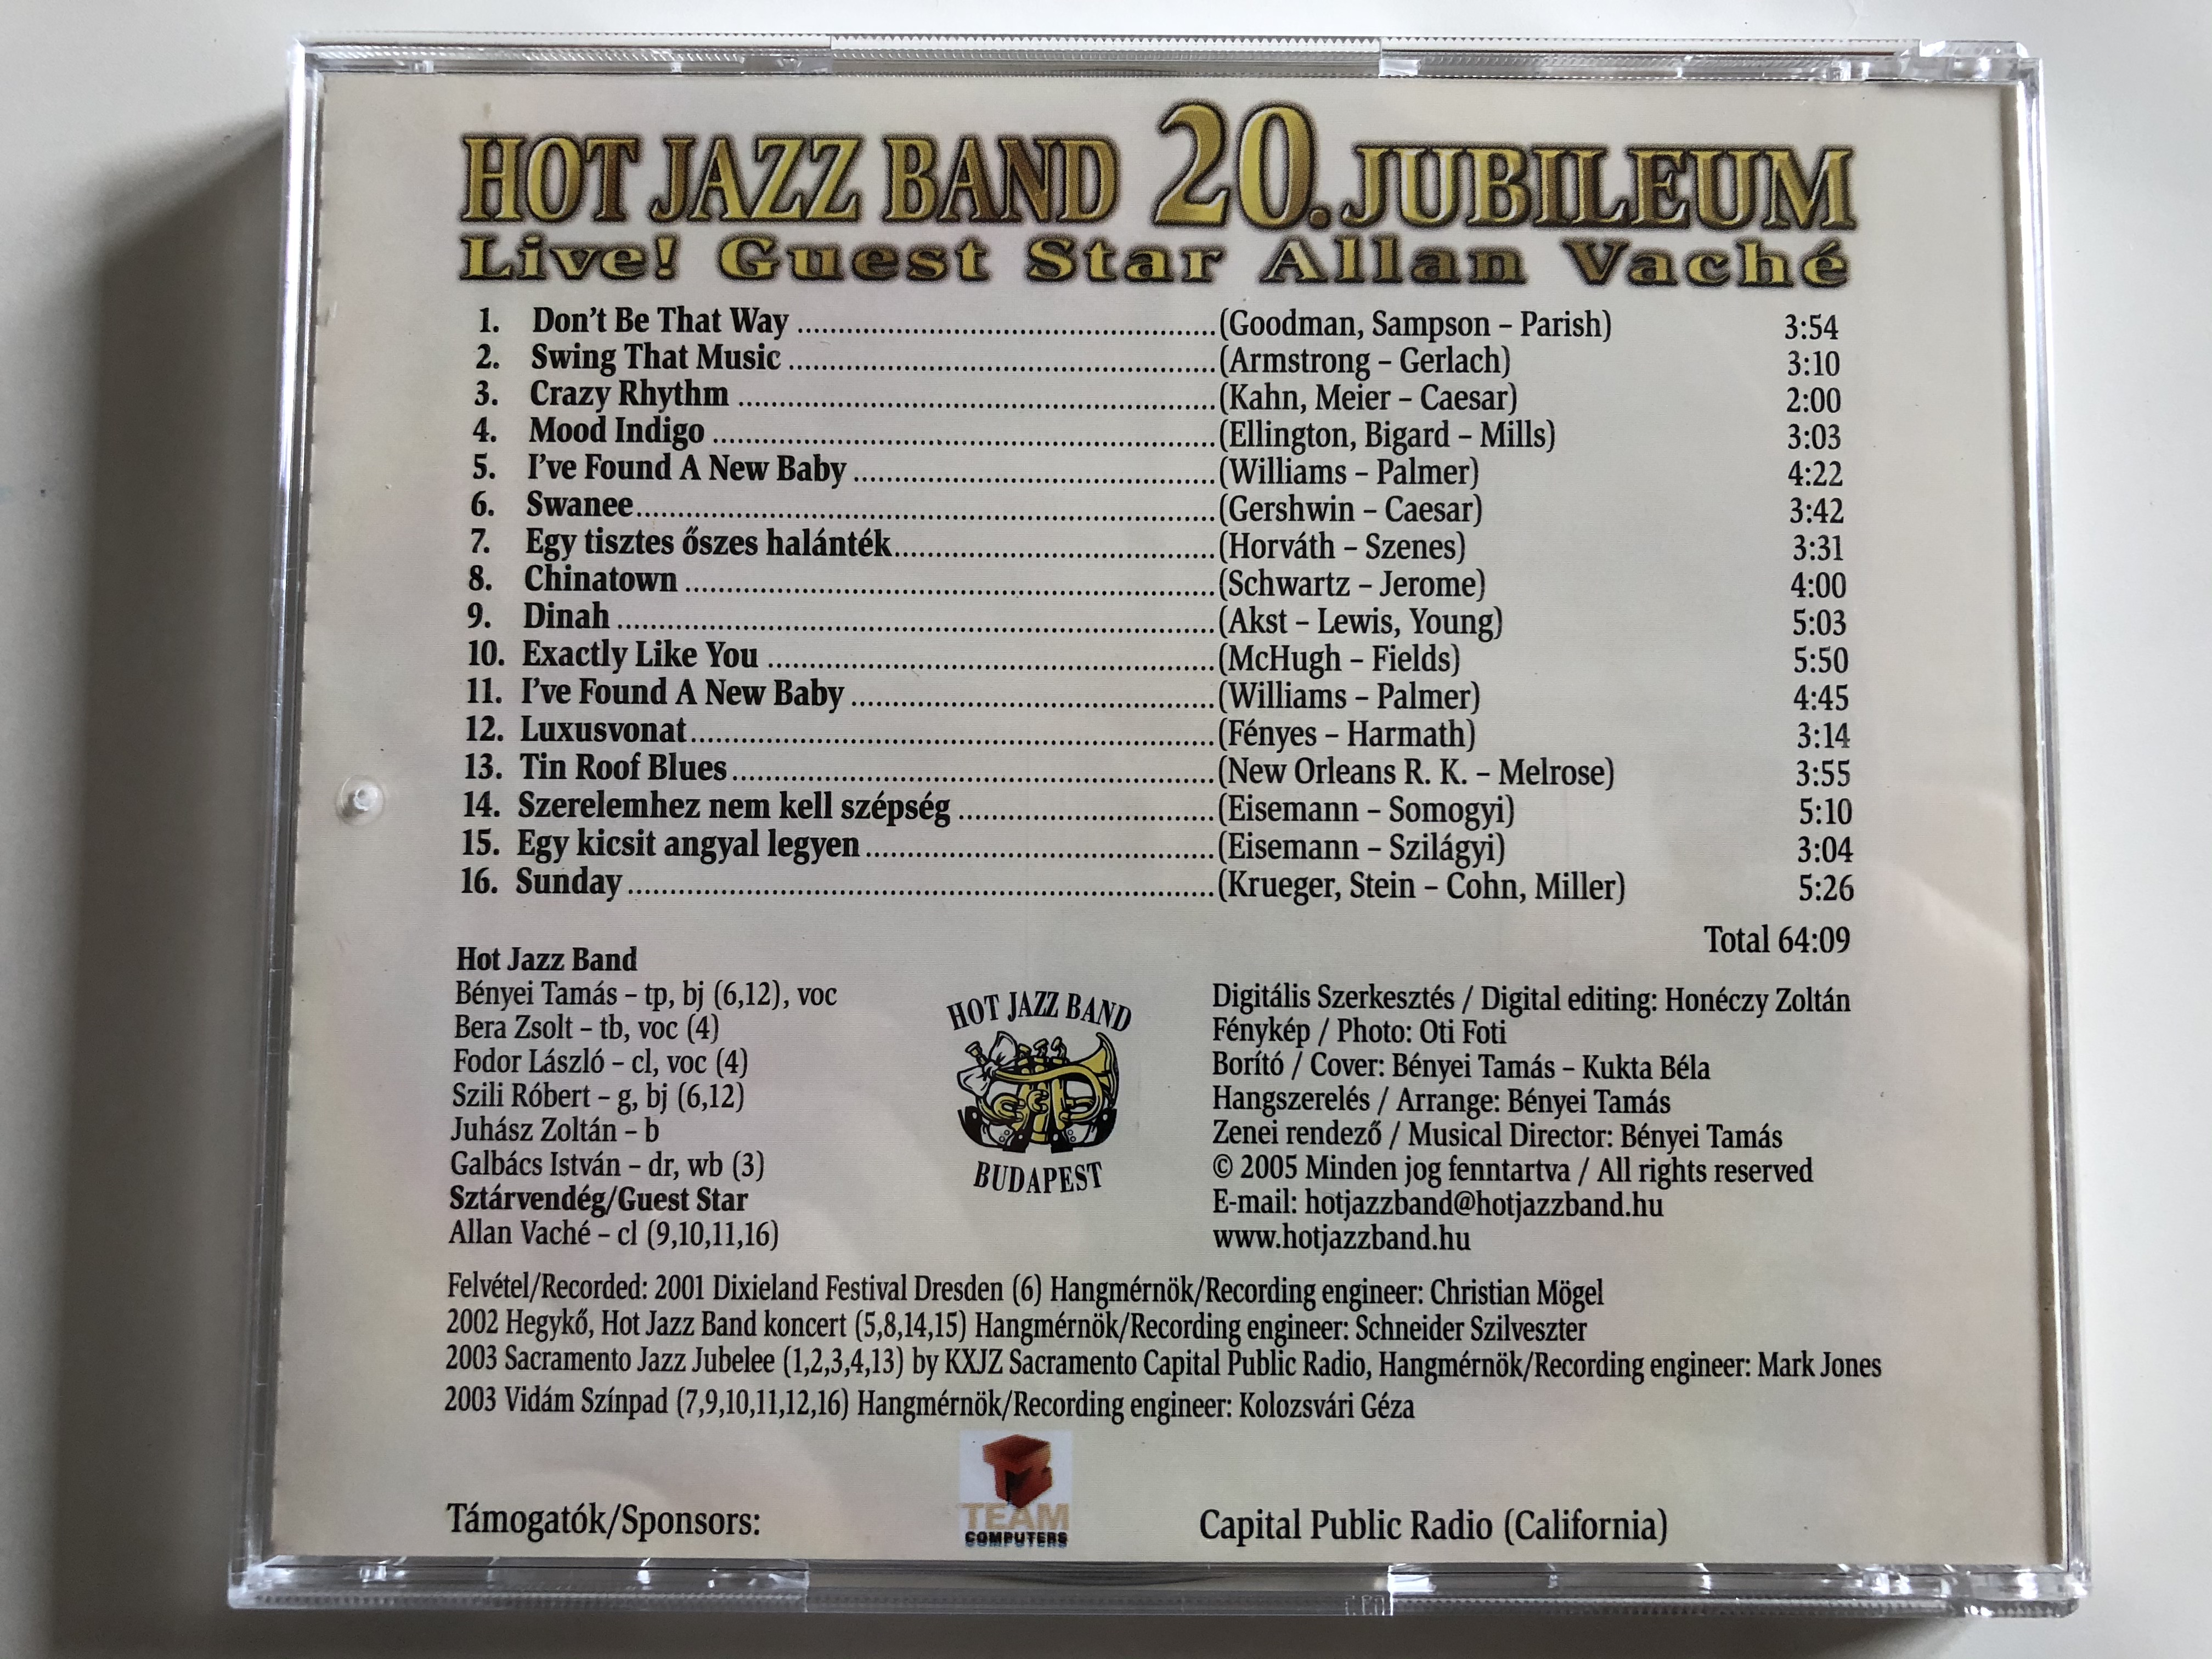 hot-jazz-band-live-allan-vache-usa-20.jubileum-hot-jazz-band-budapest-audio-cd-2005-hjb-009-9-.jpg